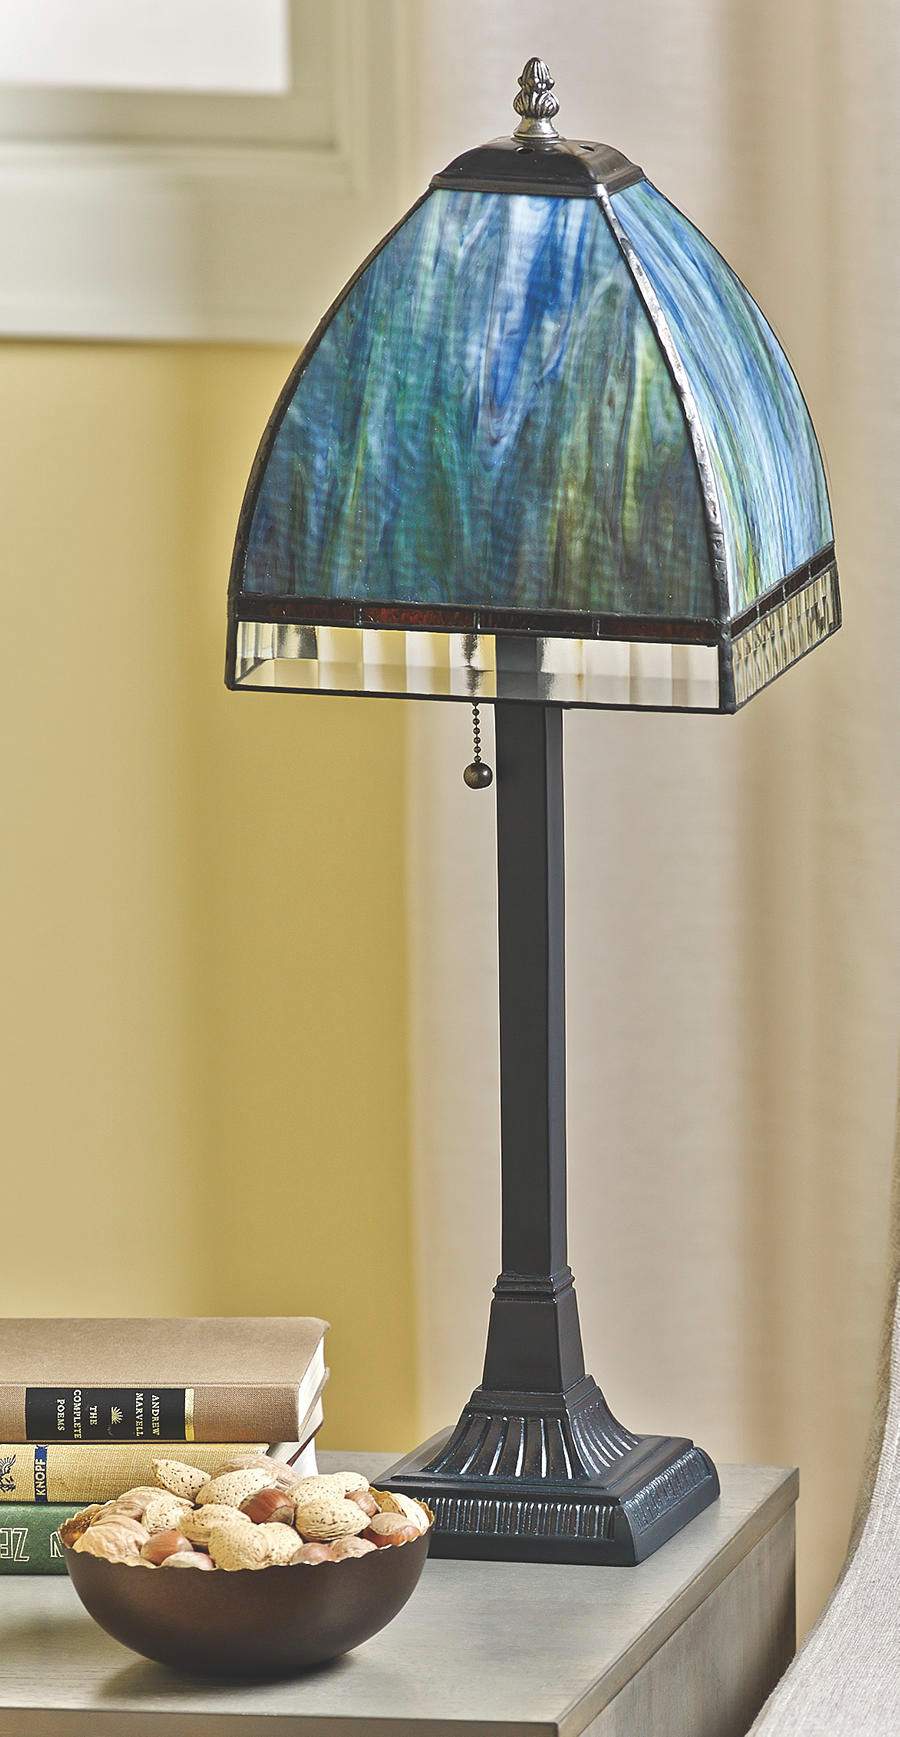 Monet's Garden Table Lamp